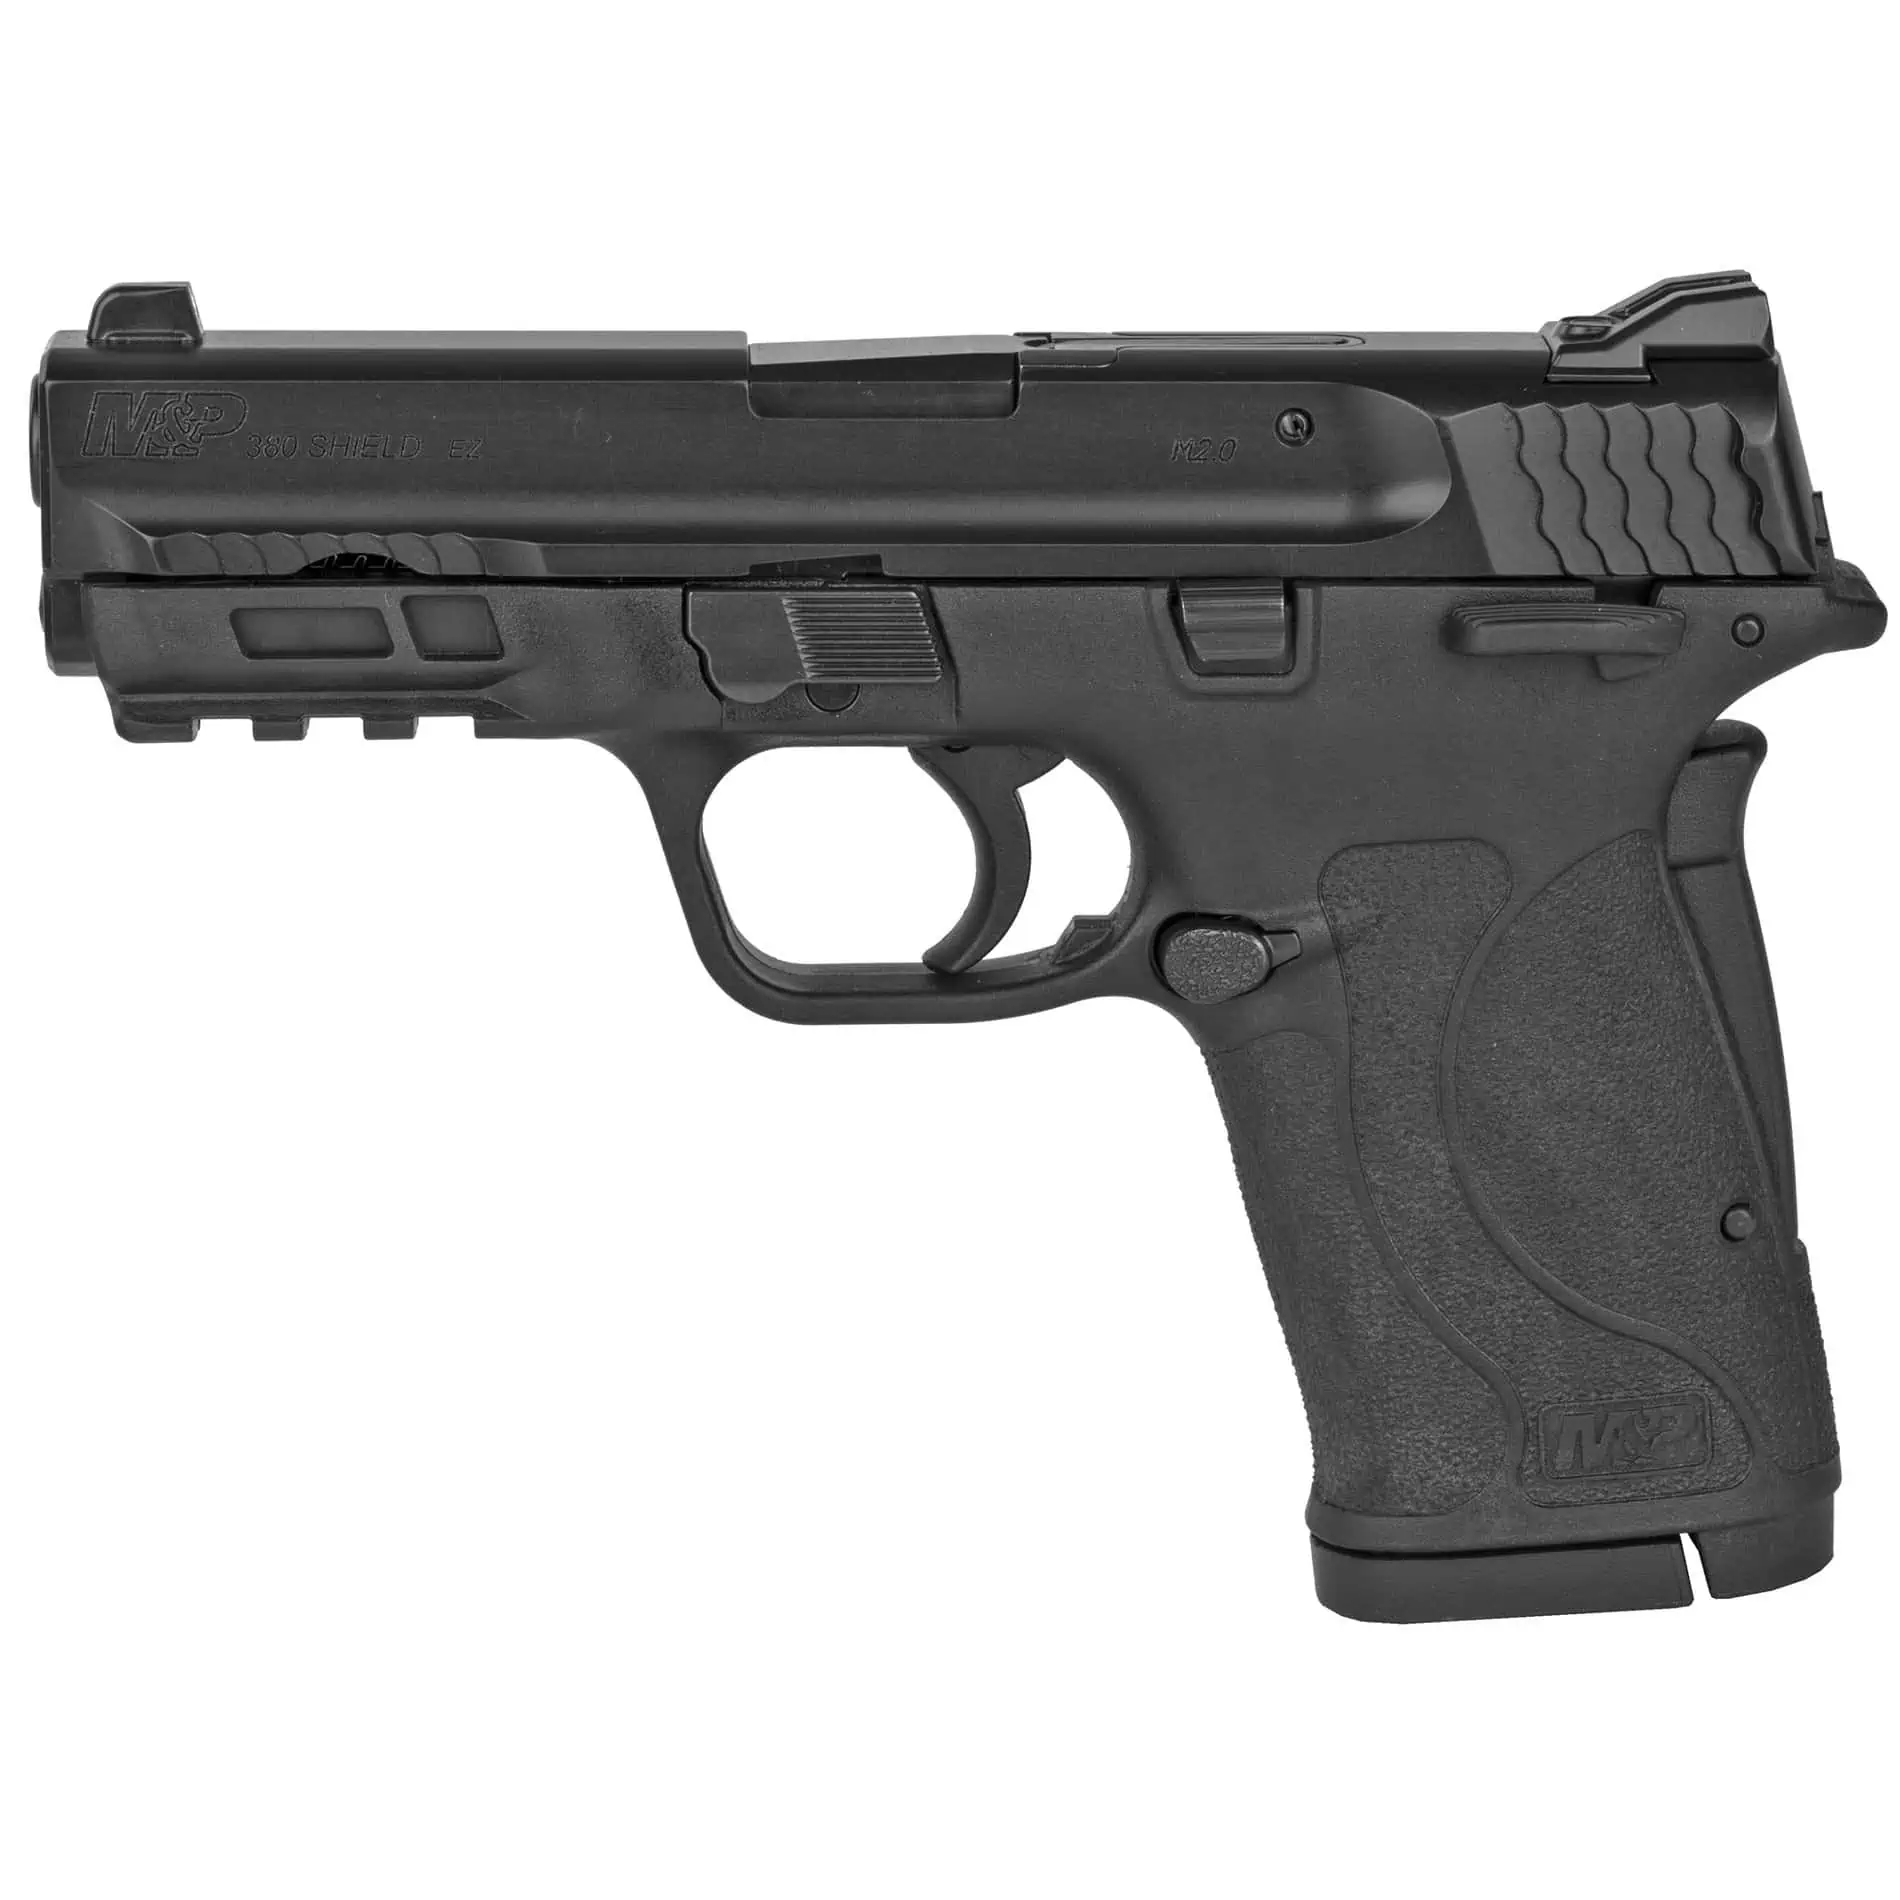 S&W Shield 2.0 EZ 380 ACP Pistol - 8 Round - Black